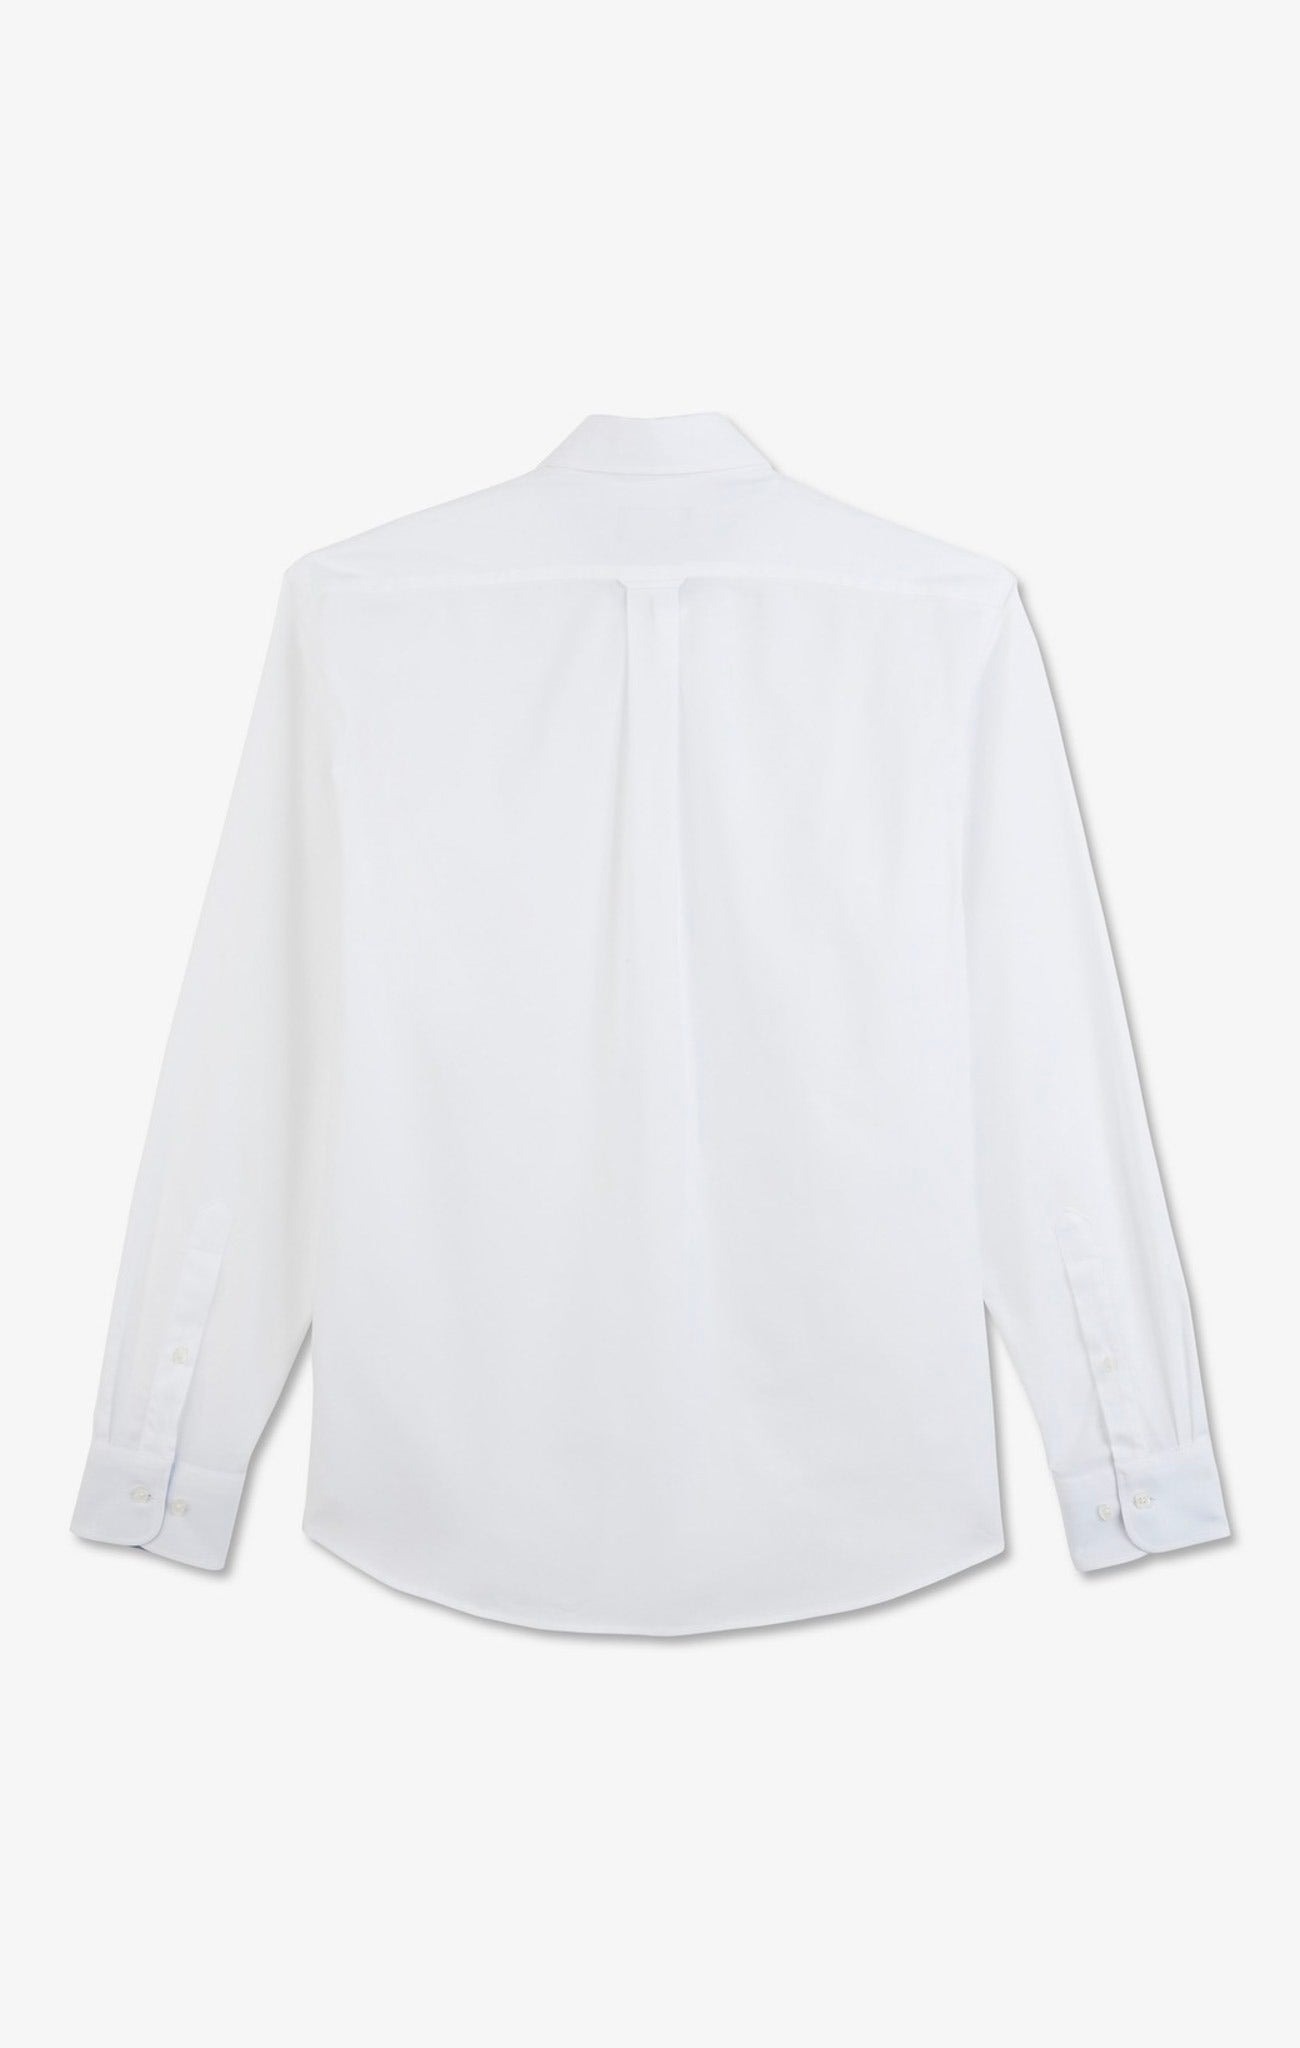 White cotton shirt - Image 6